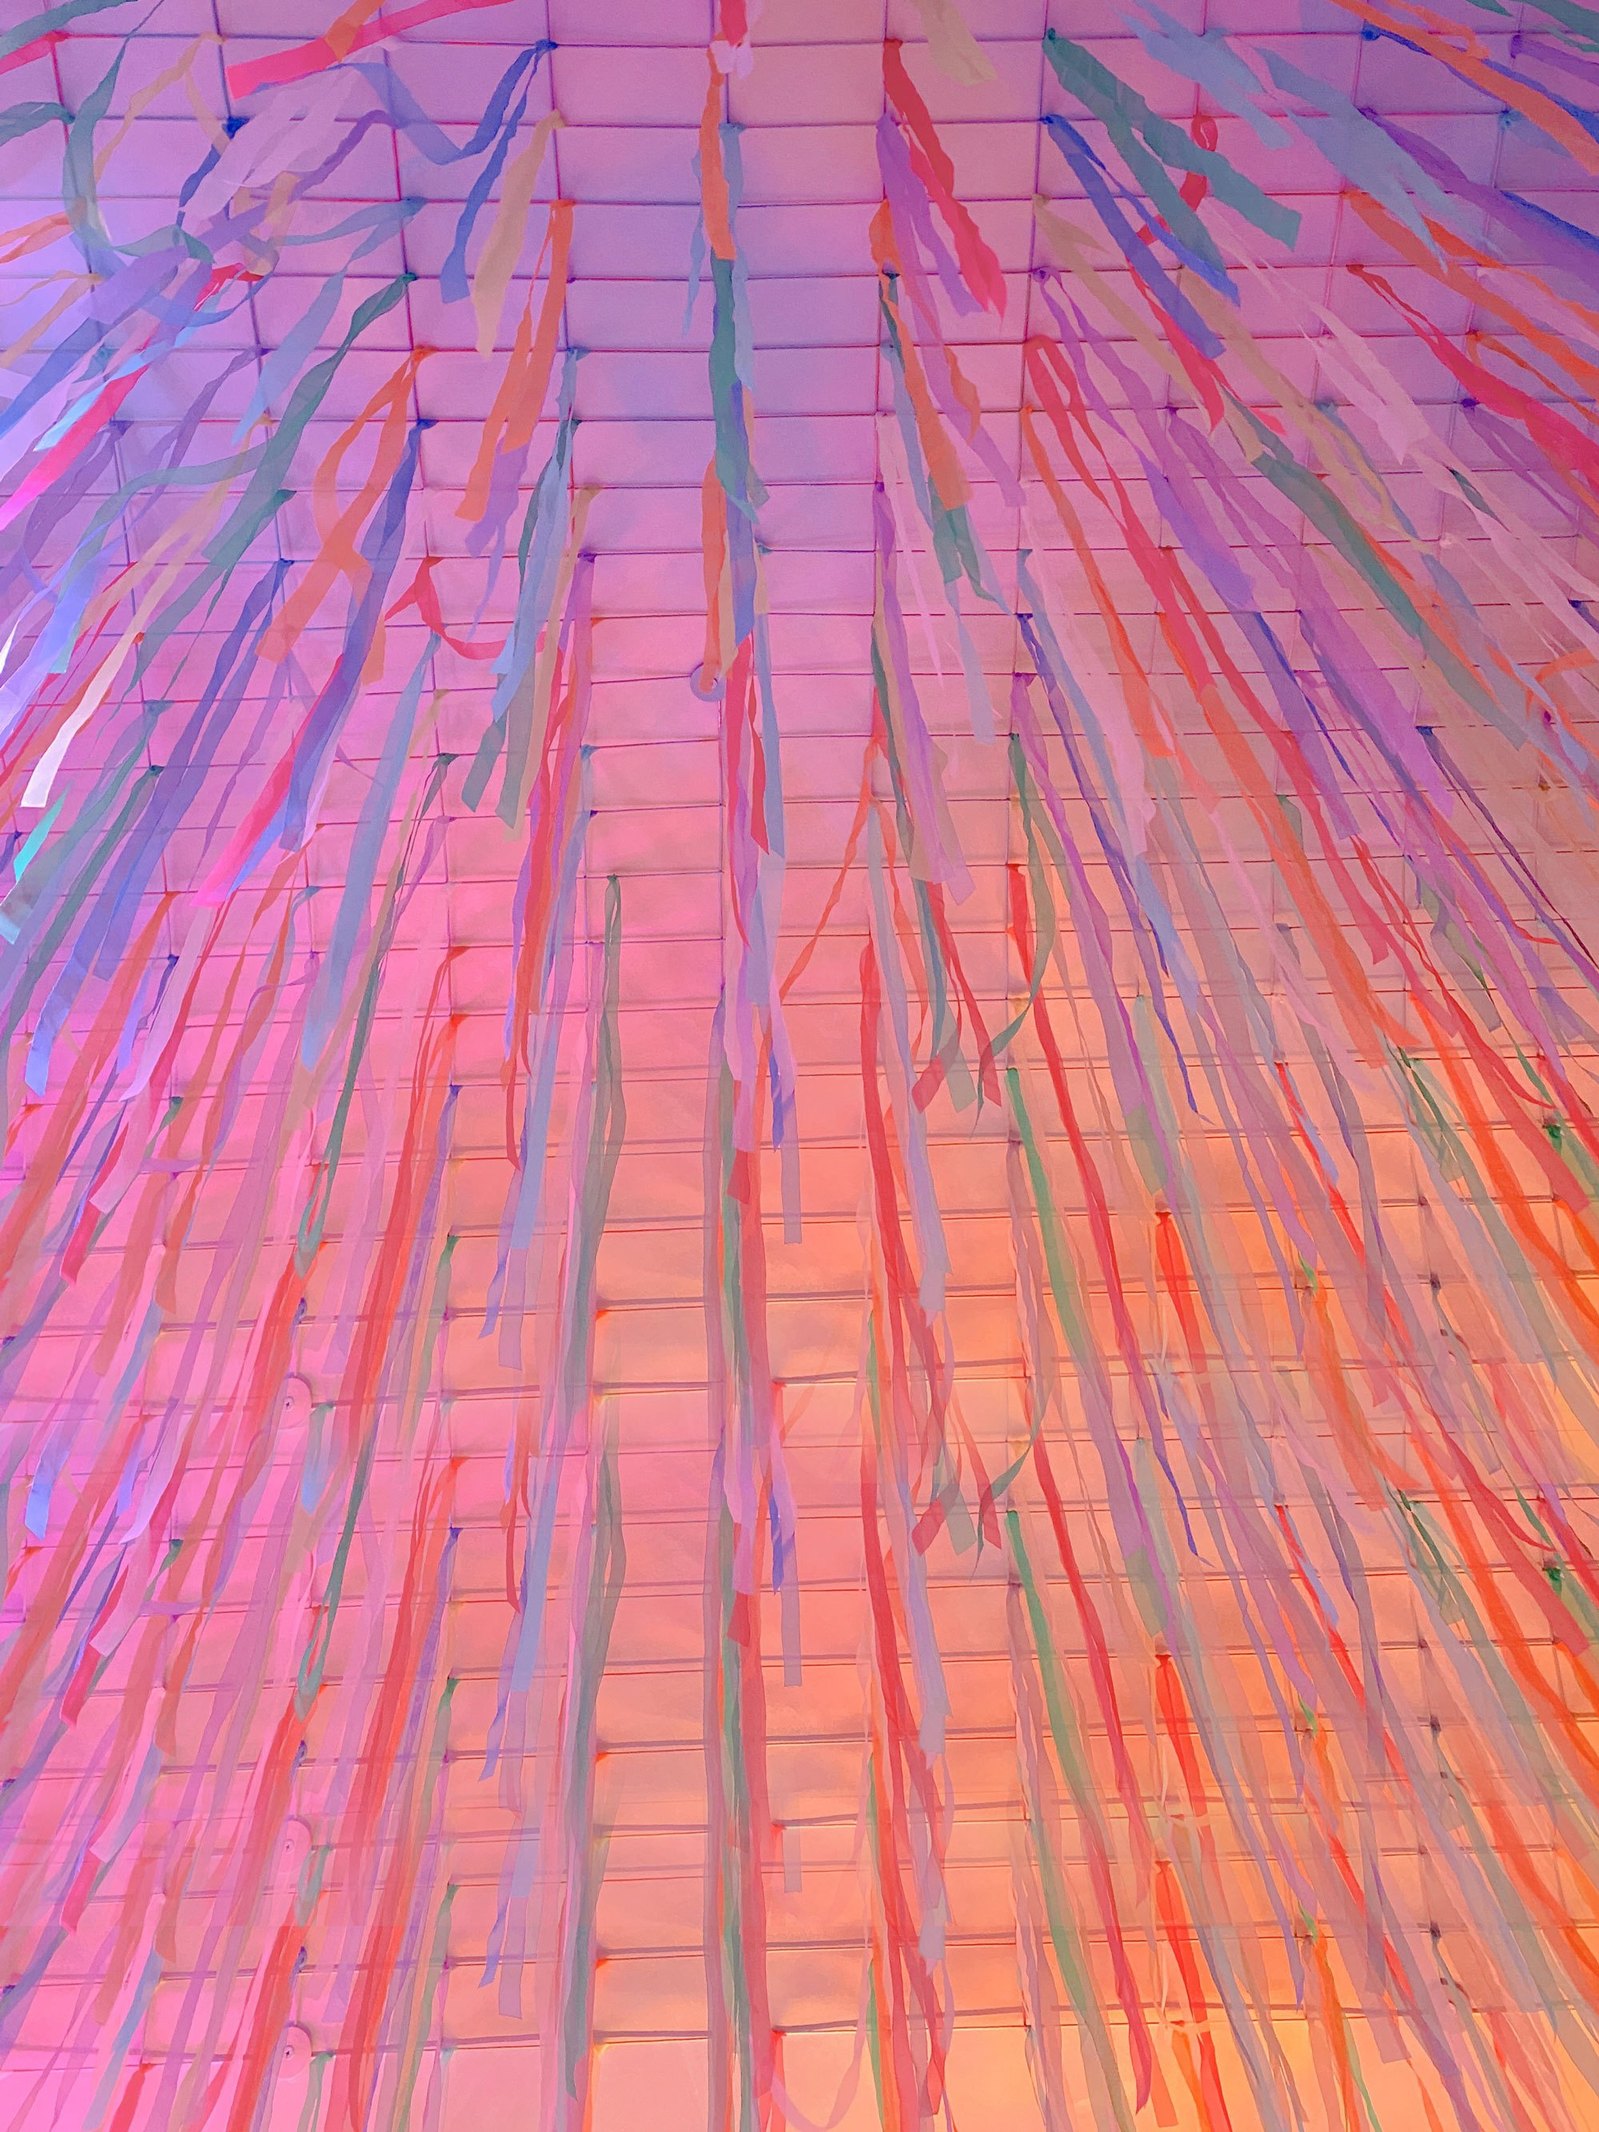 Colorful ribbon art exhibit.